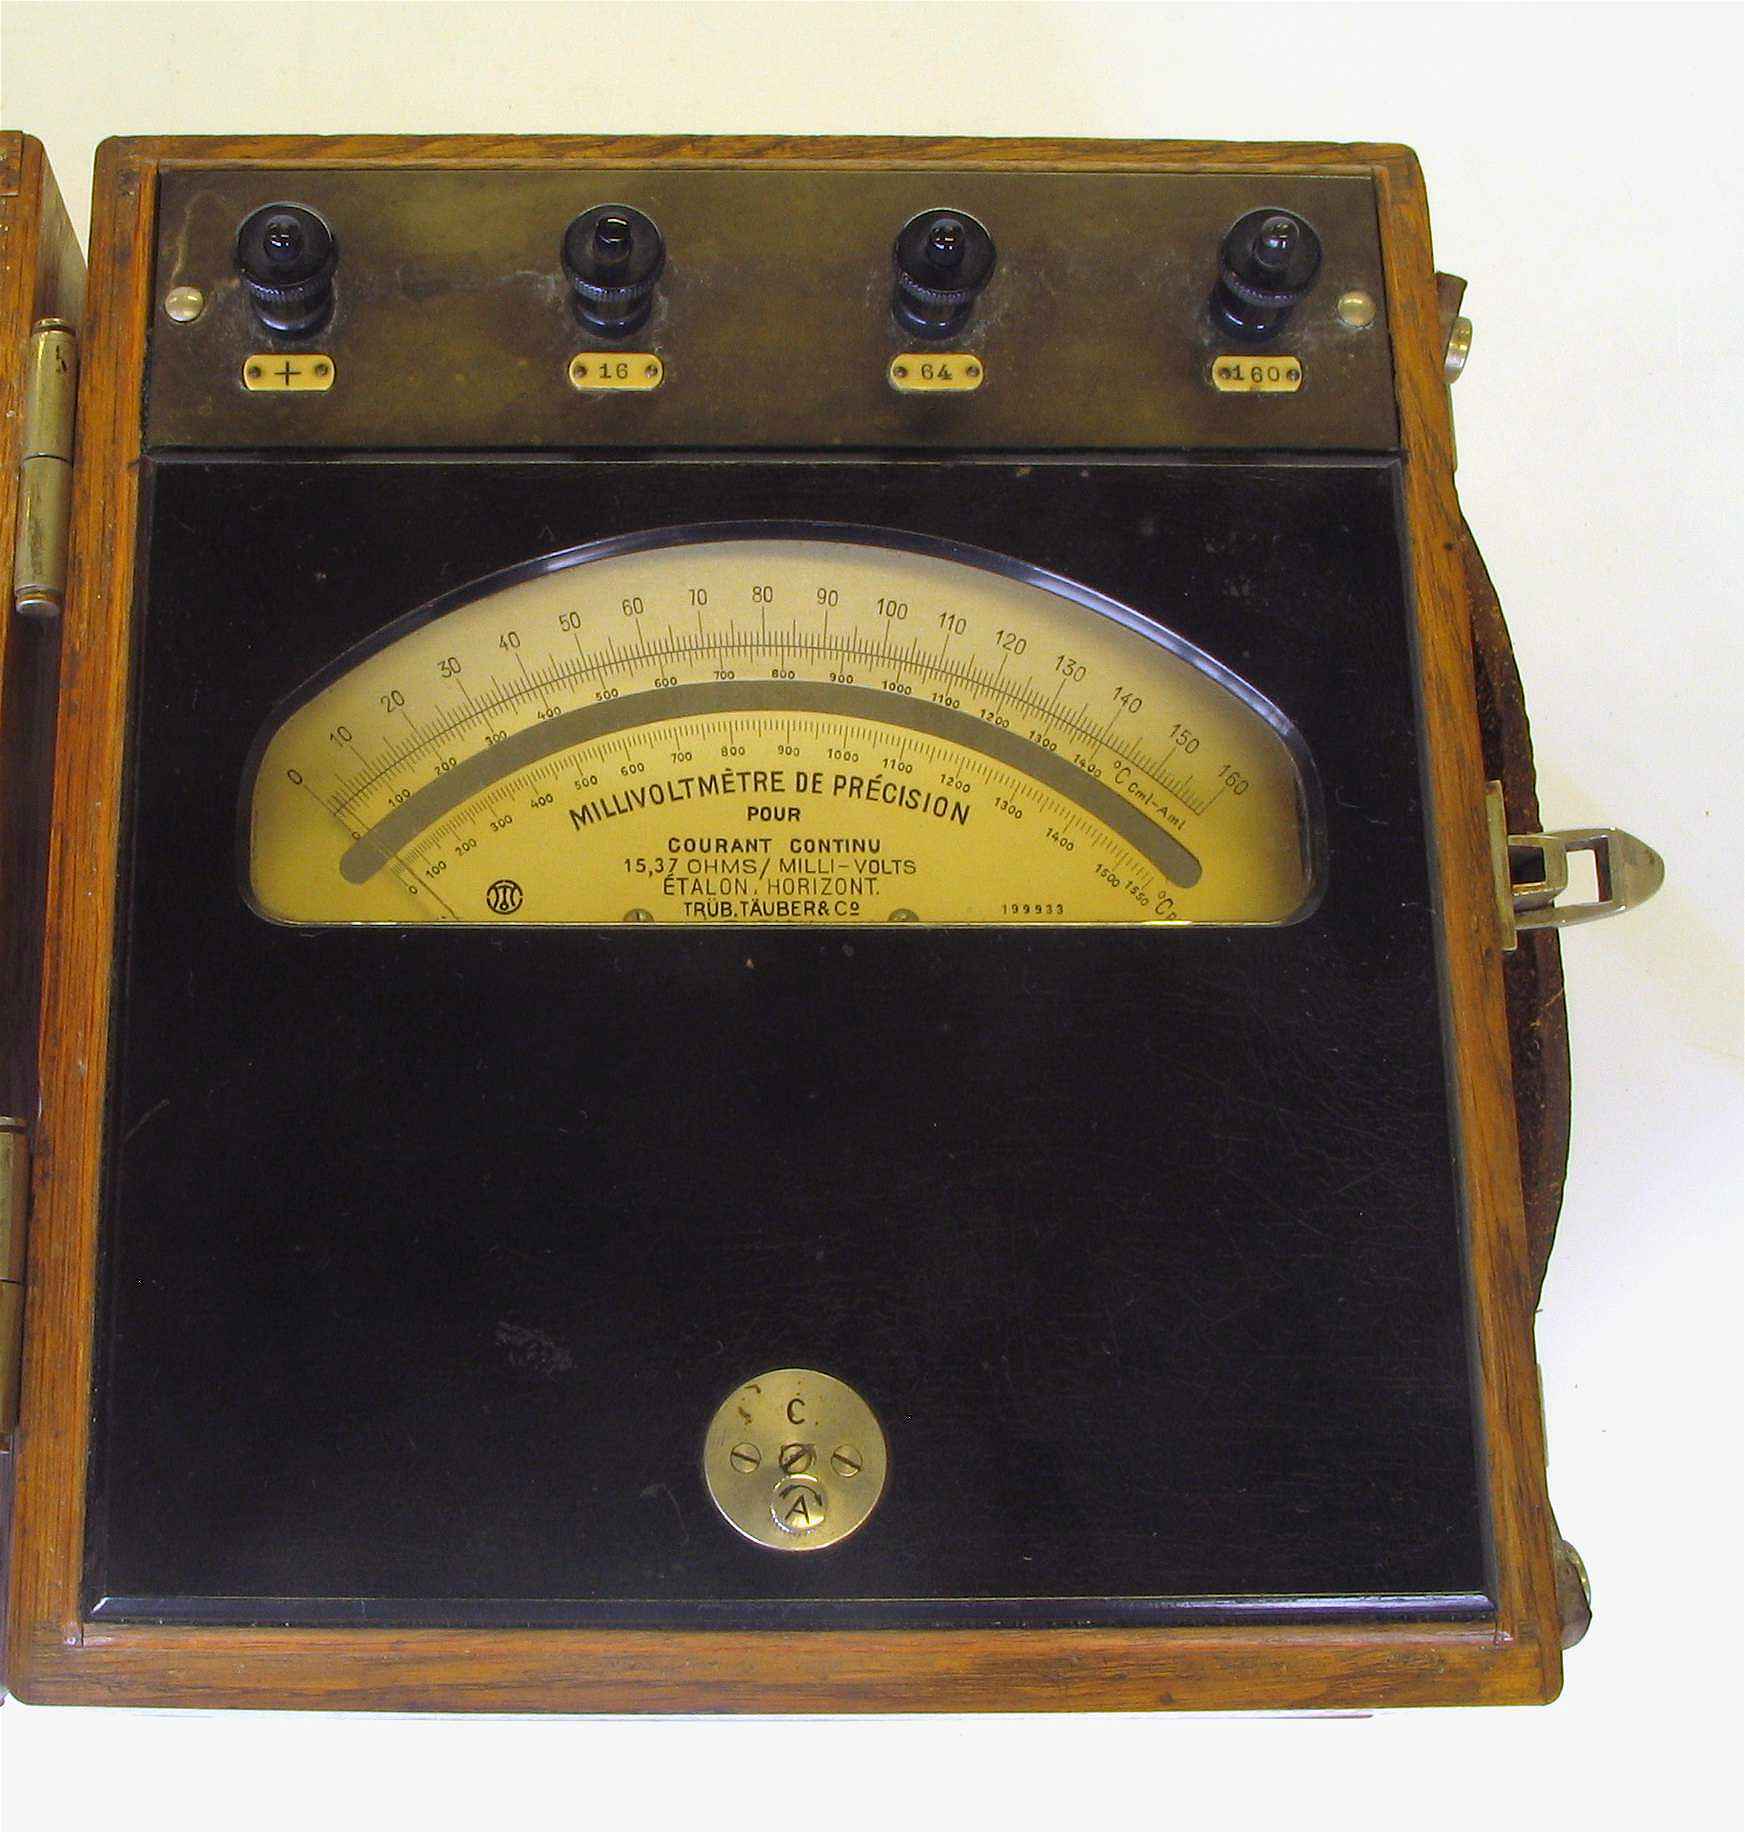 Millivoltmètre et thermomètre portatif
(16 – 64 – 160 mV; 1400/1550°C)